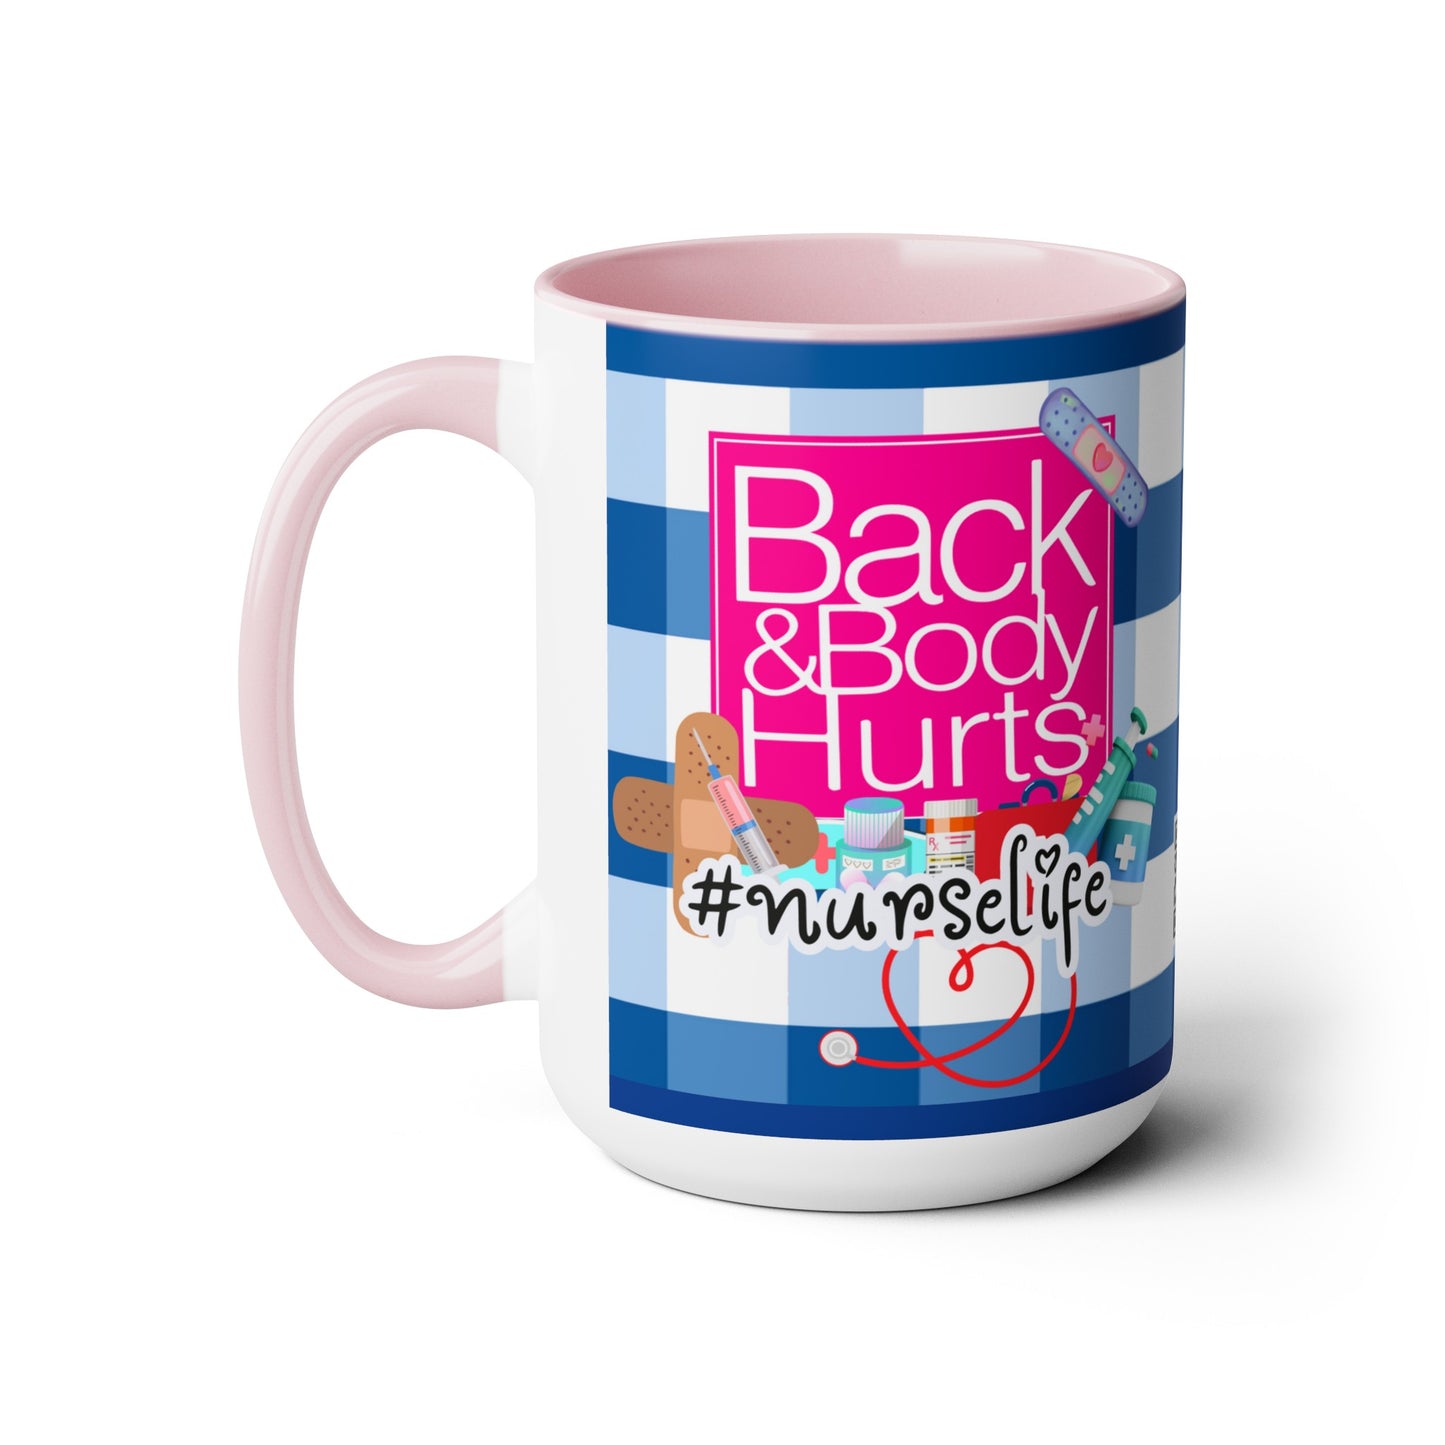 Nurse Life Back and Body Hurts Mug Sassy Coffee Meme Mugs Sarcastic Funny Coffee Mug Fashion Large Coffee Cup Teacher Adult Humor Nurse Gift